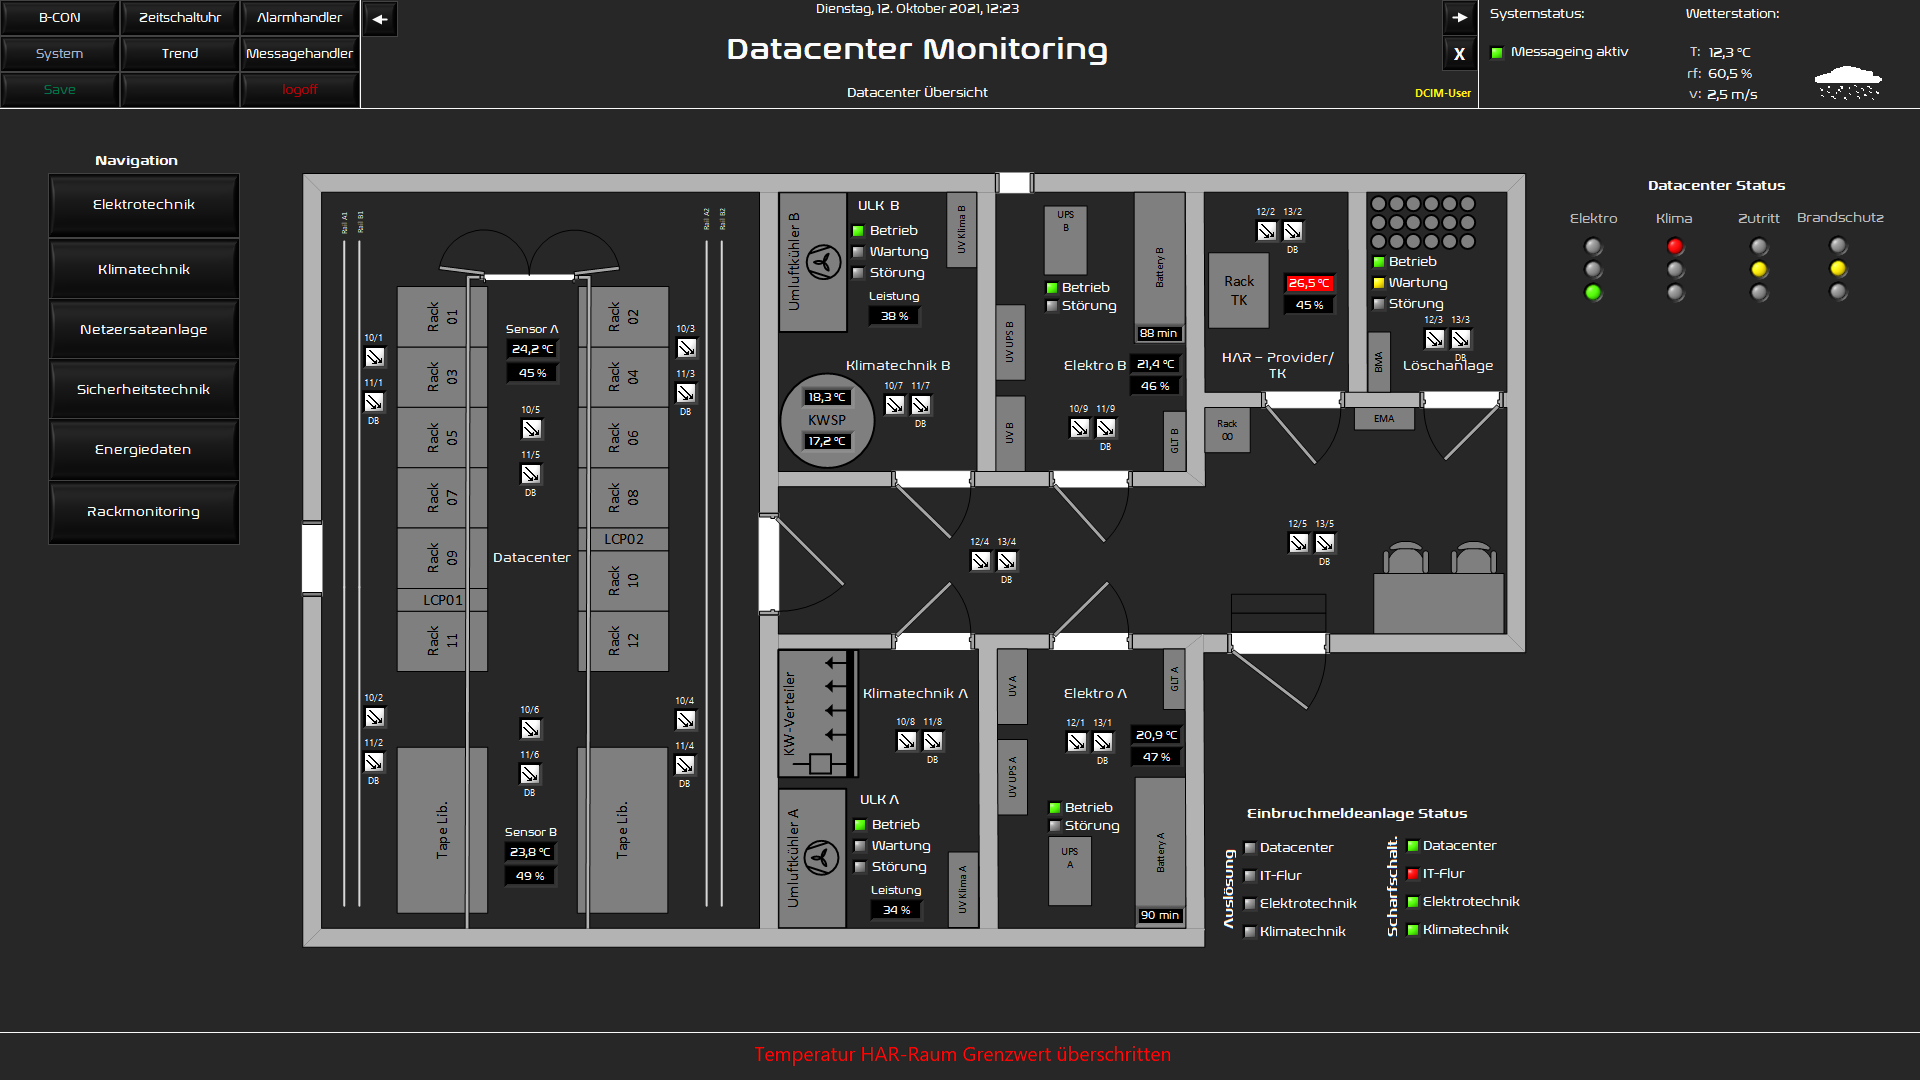 Infrastructure / Datacenter Monitoring